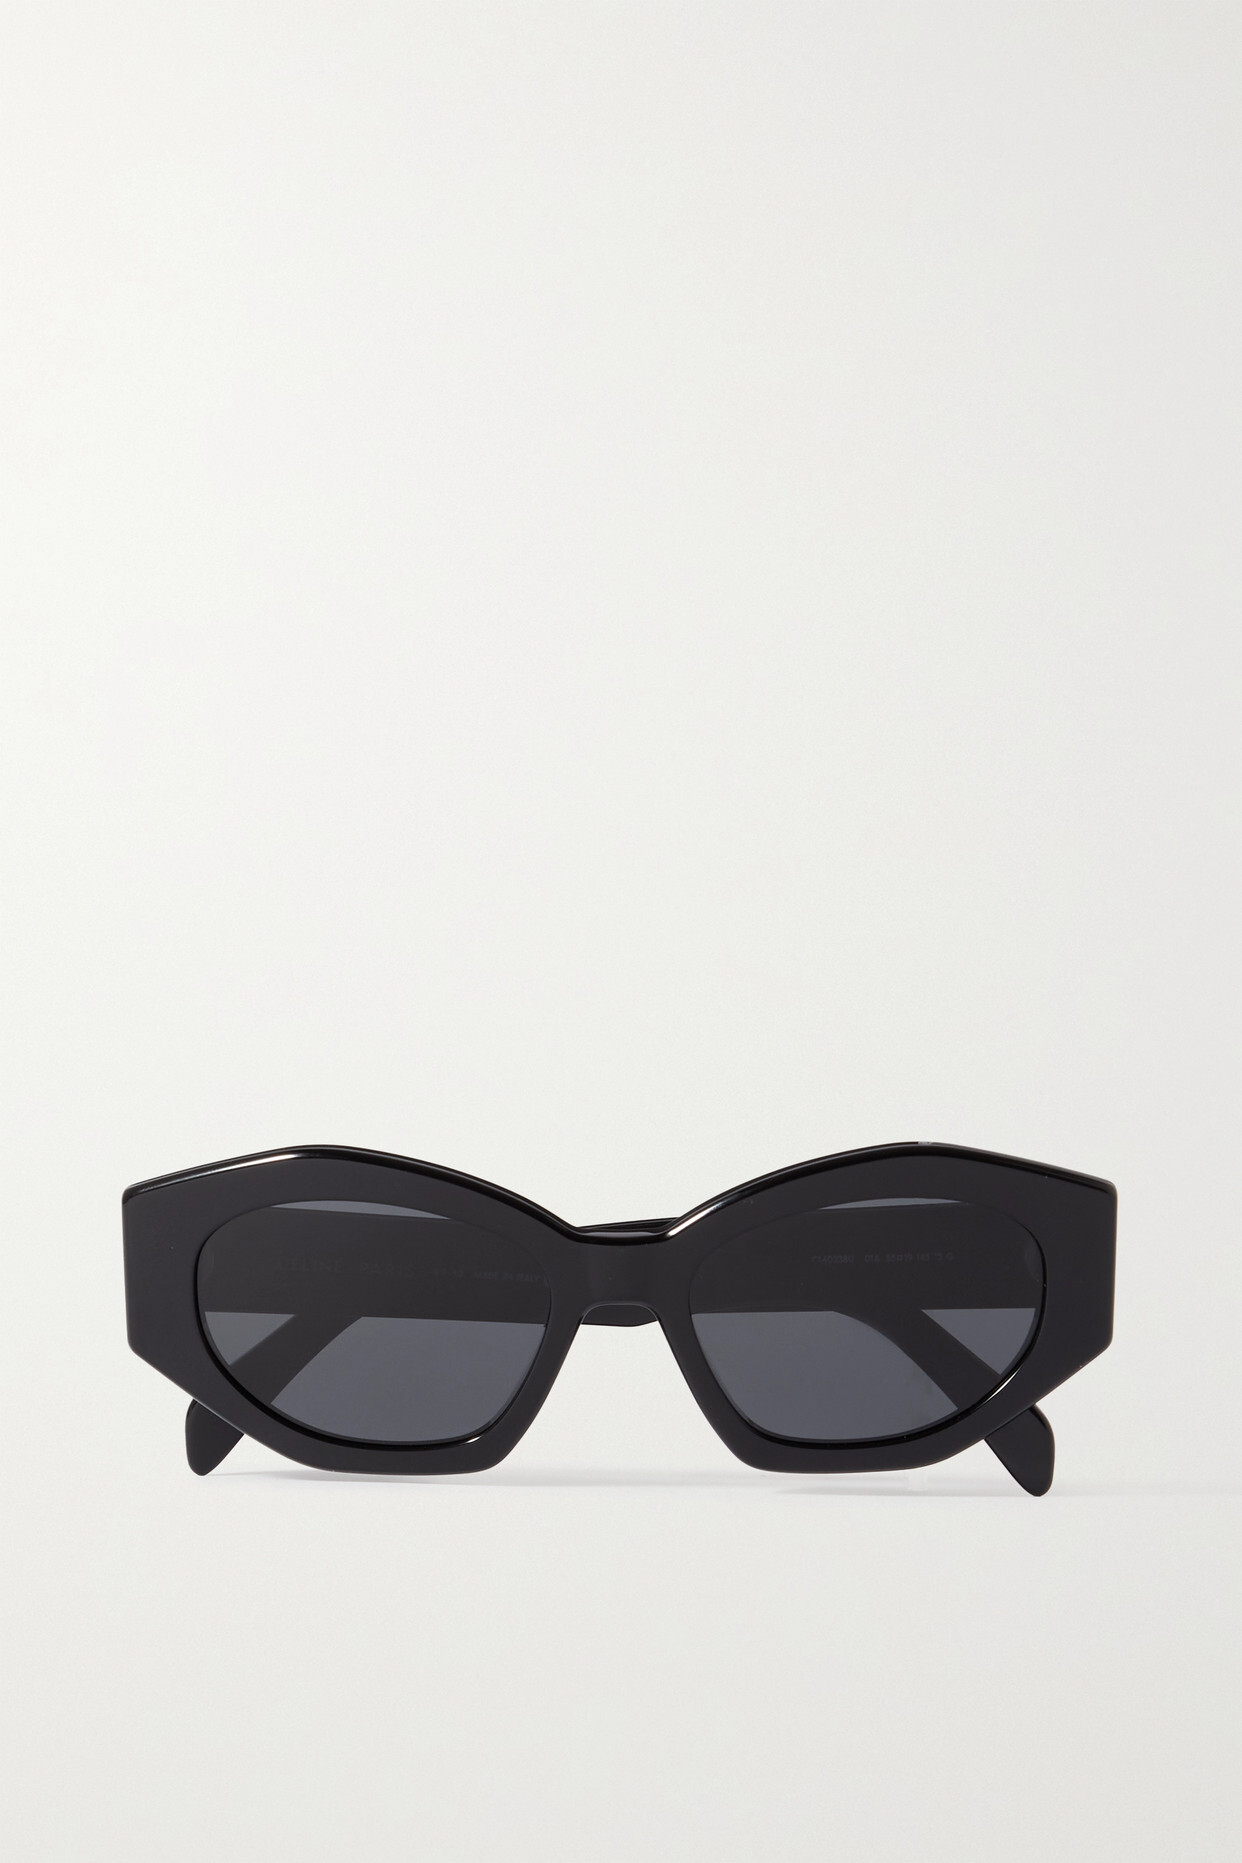 CELINE Eyewear - Triomphe Cat-eye Acetate Sunglasses - Black